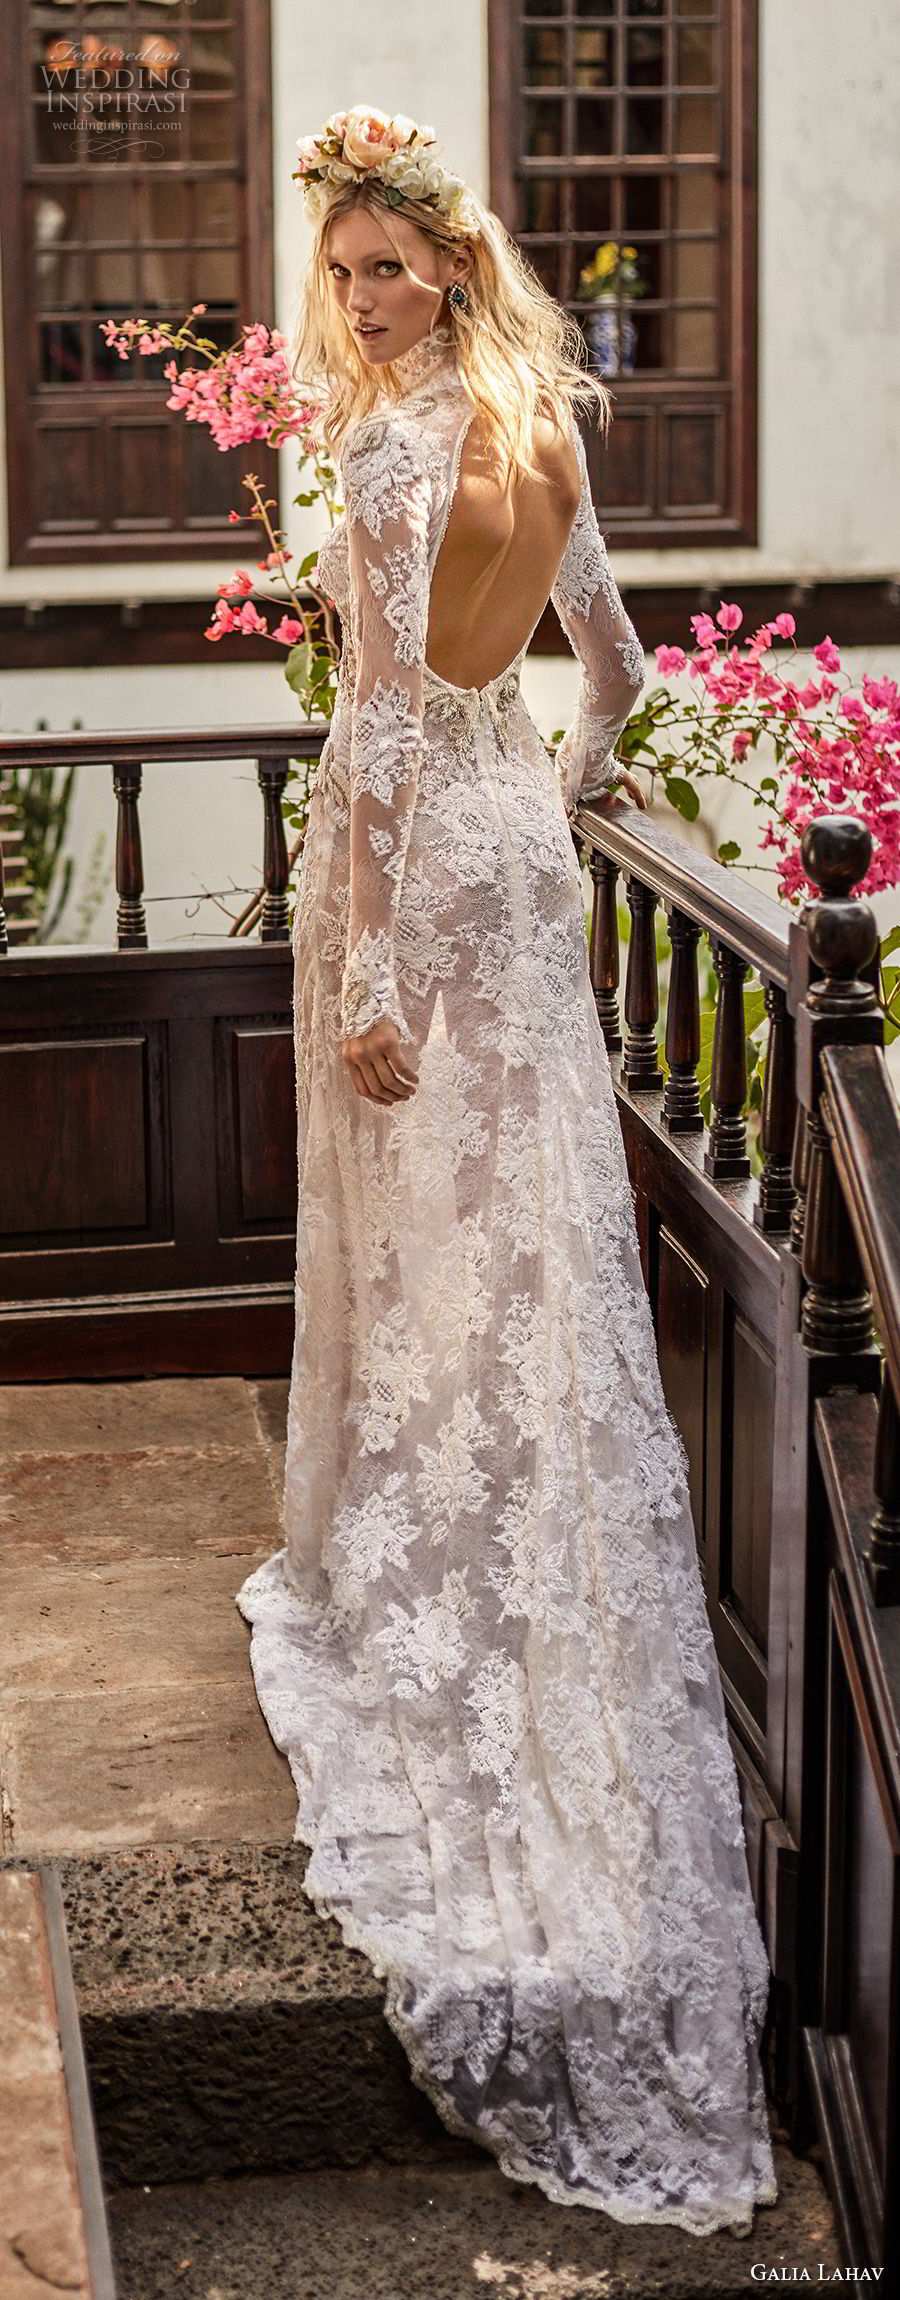 galia lahav couture fall 2018 bridal long sleeves high neck full lace embelliishment elegant sheath wedding dress open back sweep train (12) bv